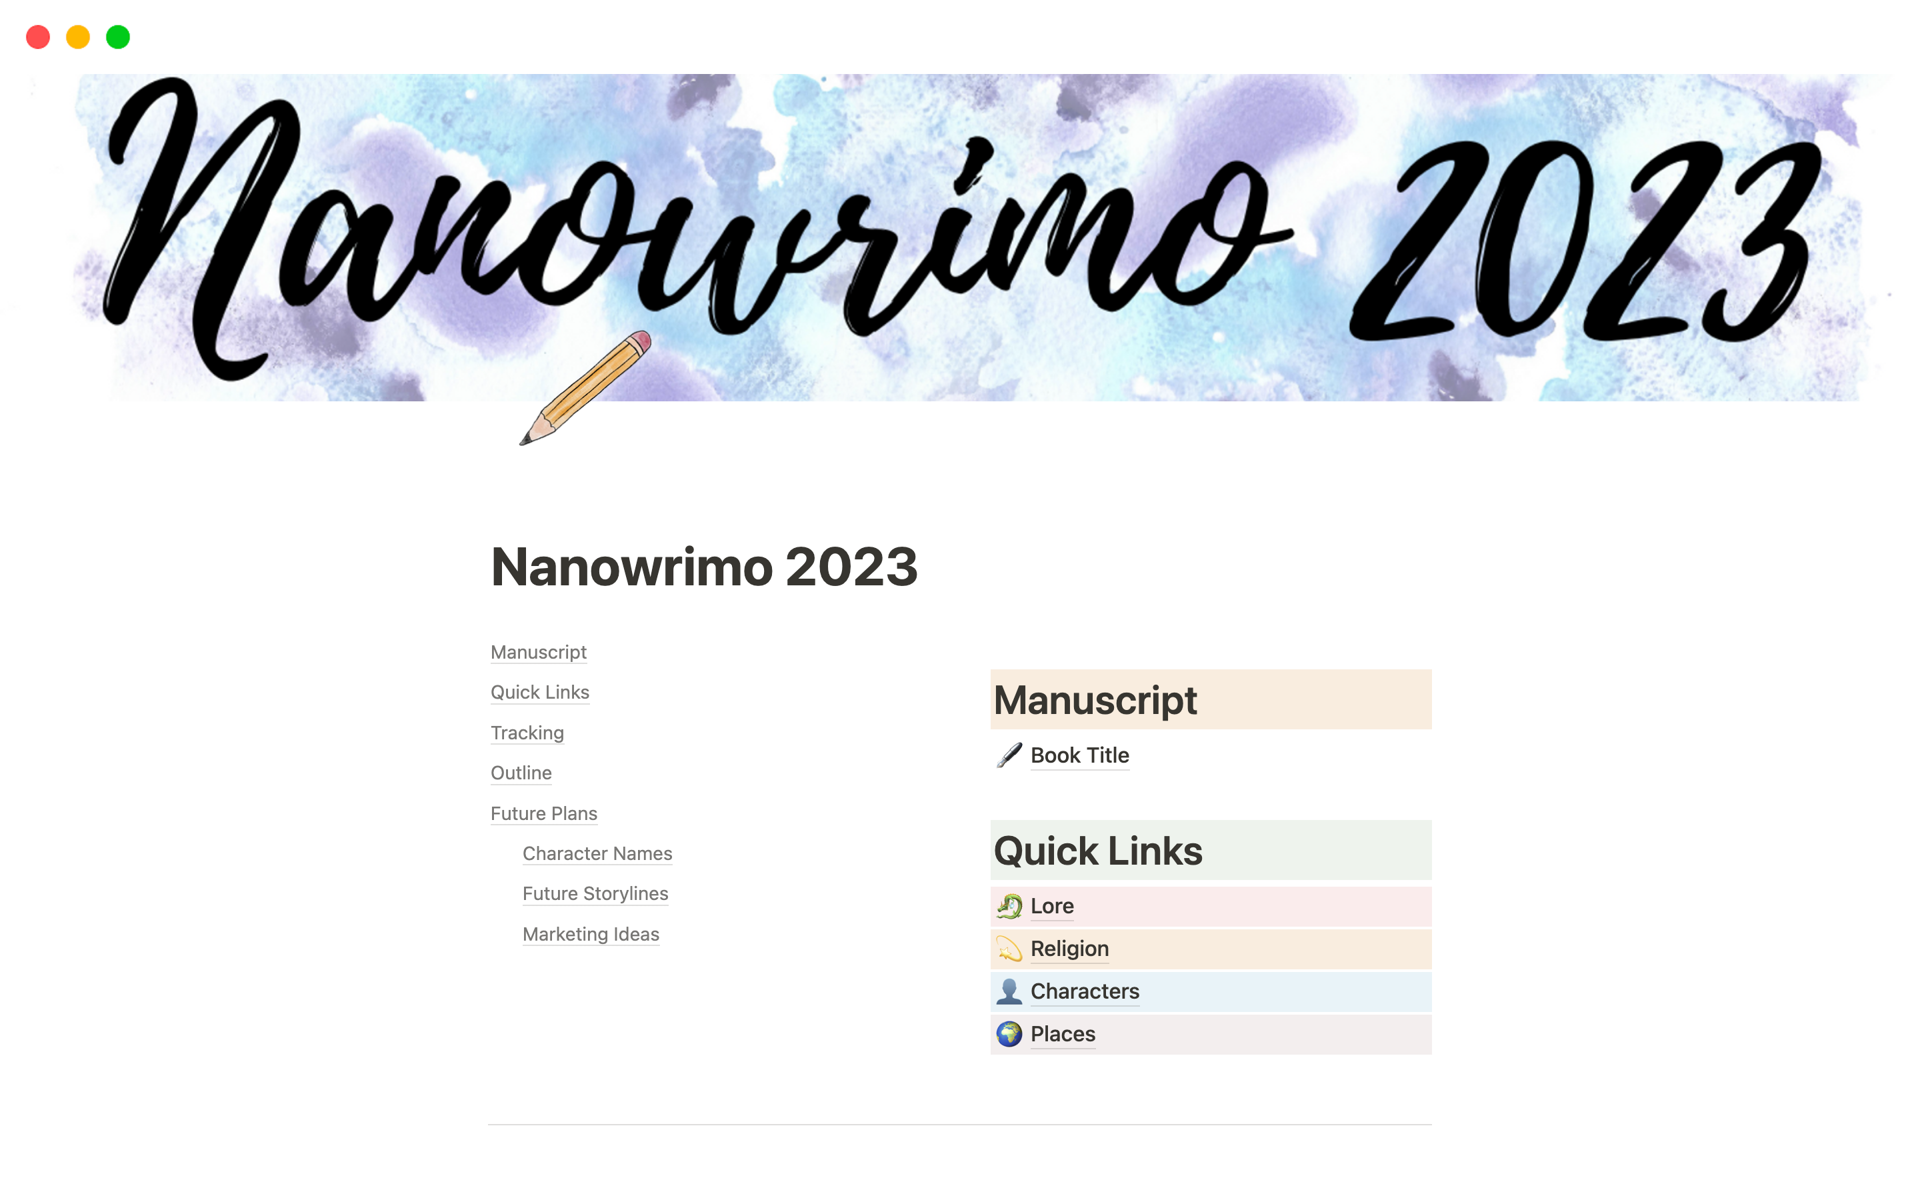 Get organized for Nanowrimo 2023!